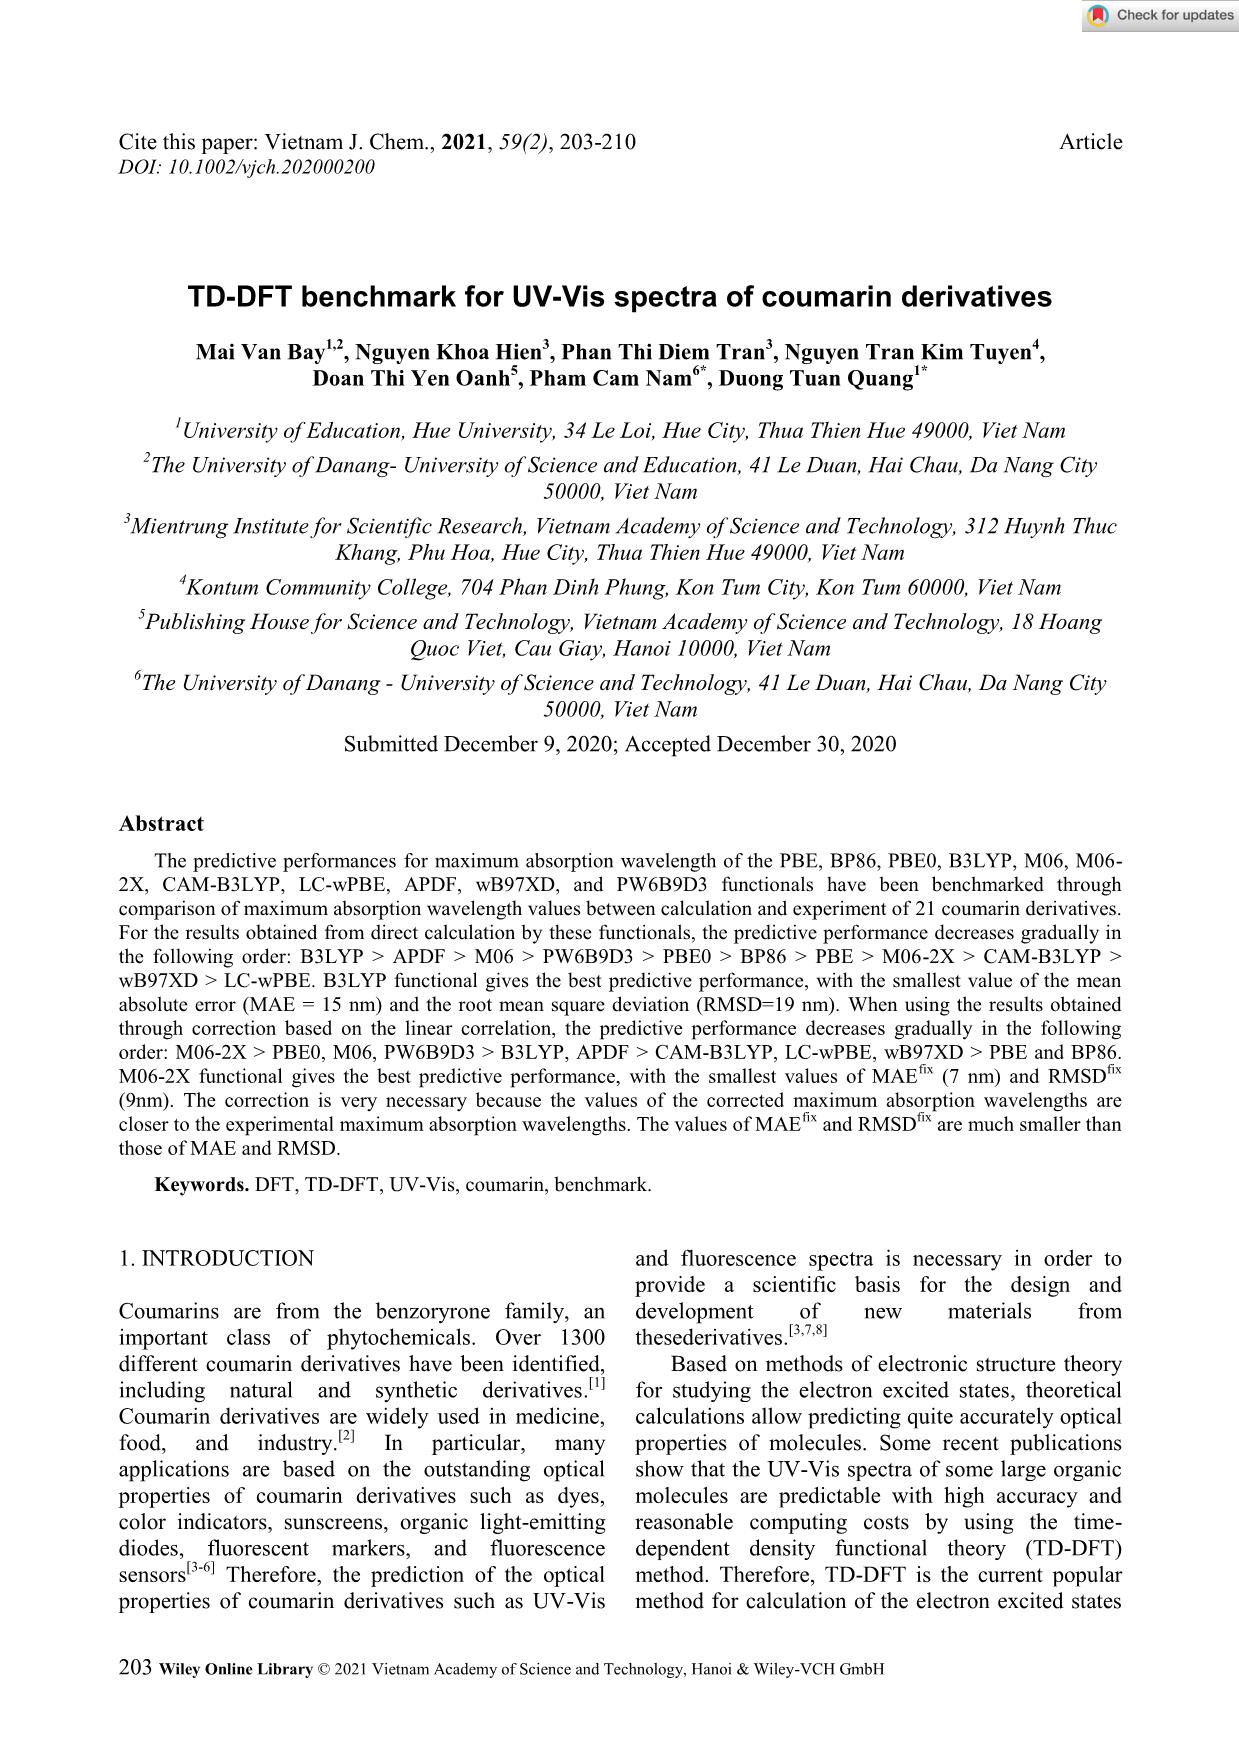 TD-DFT benchmark for UV-Vis spectra of coumarin derivatives trang 1